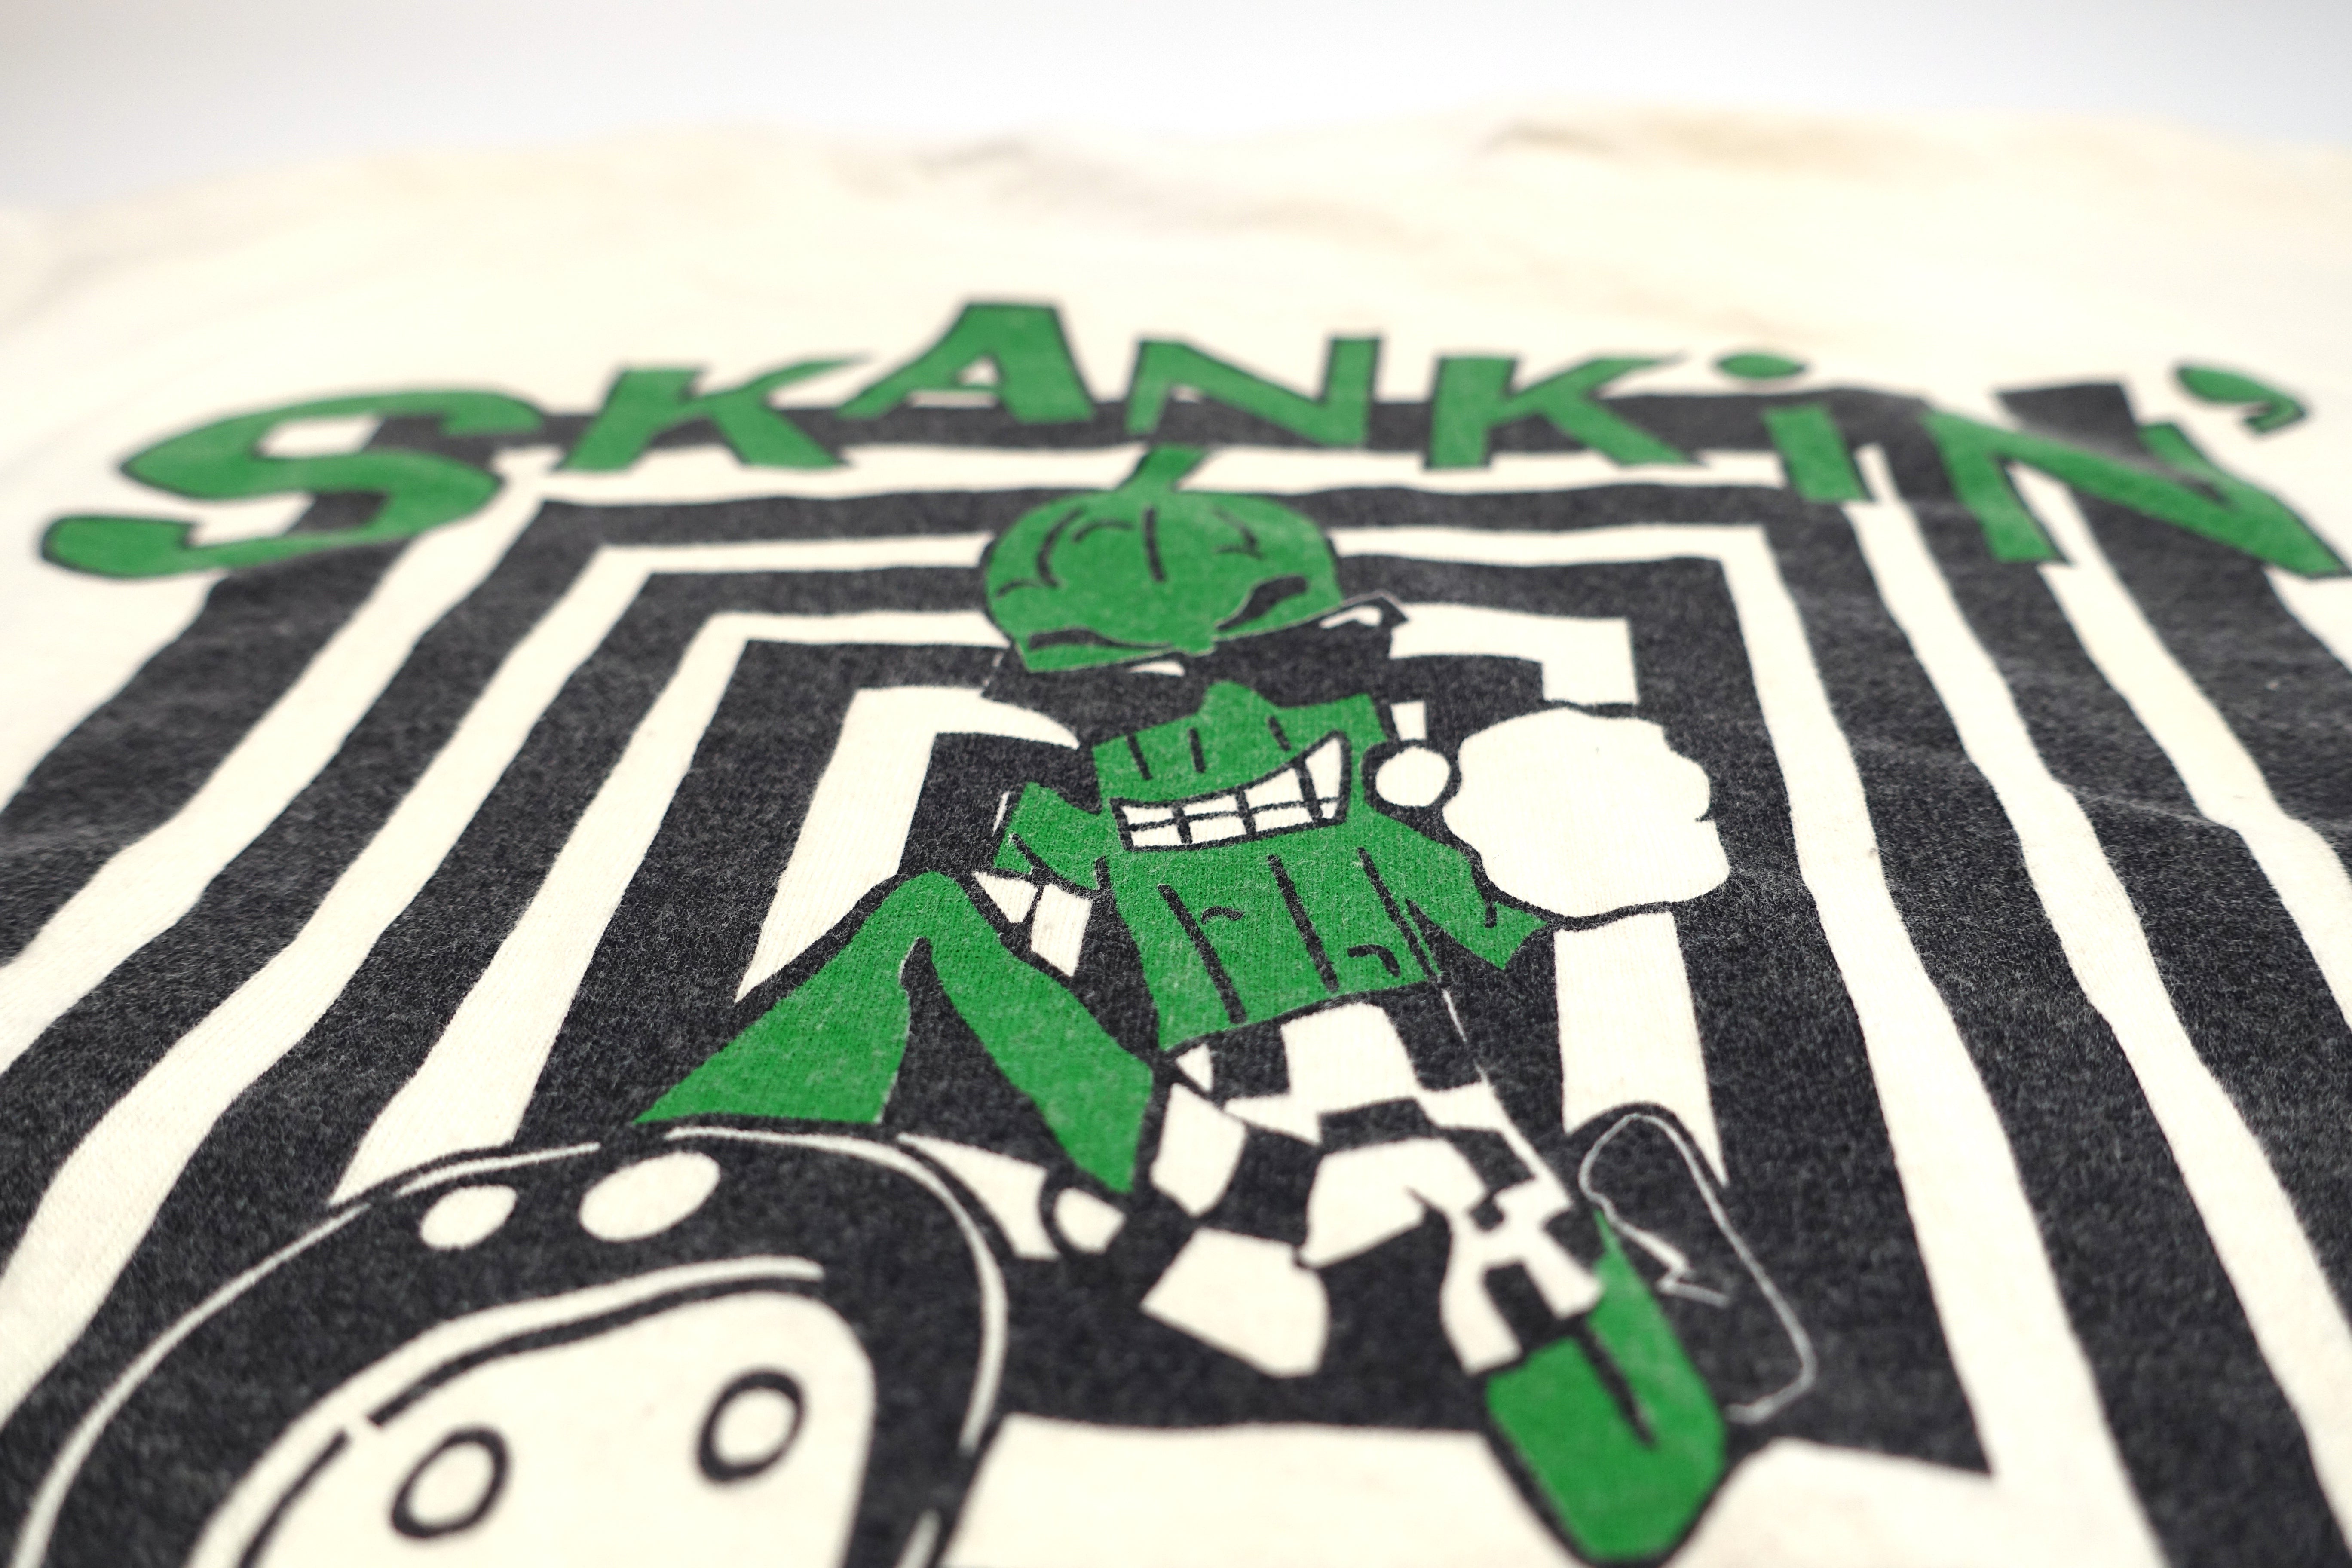 Skankin' Pickle ‎– the Skankin' Pickle 90's Tour Shirt Size XL